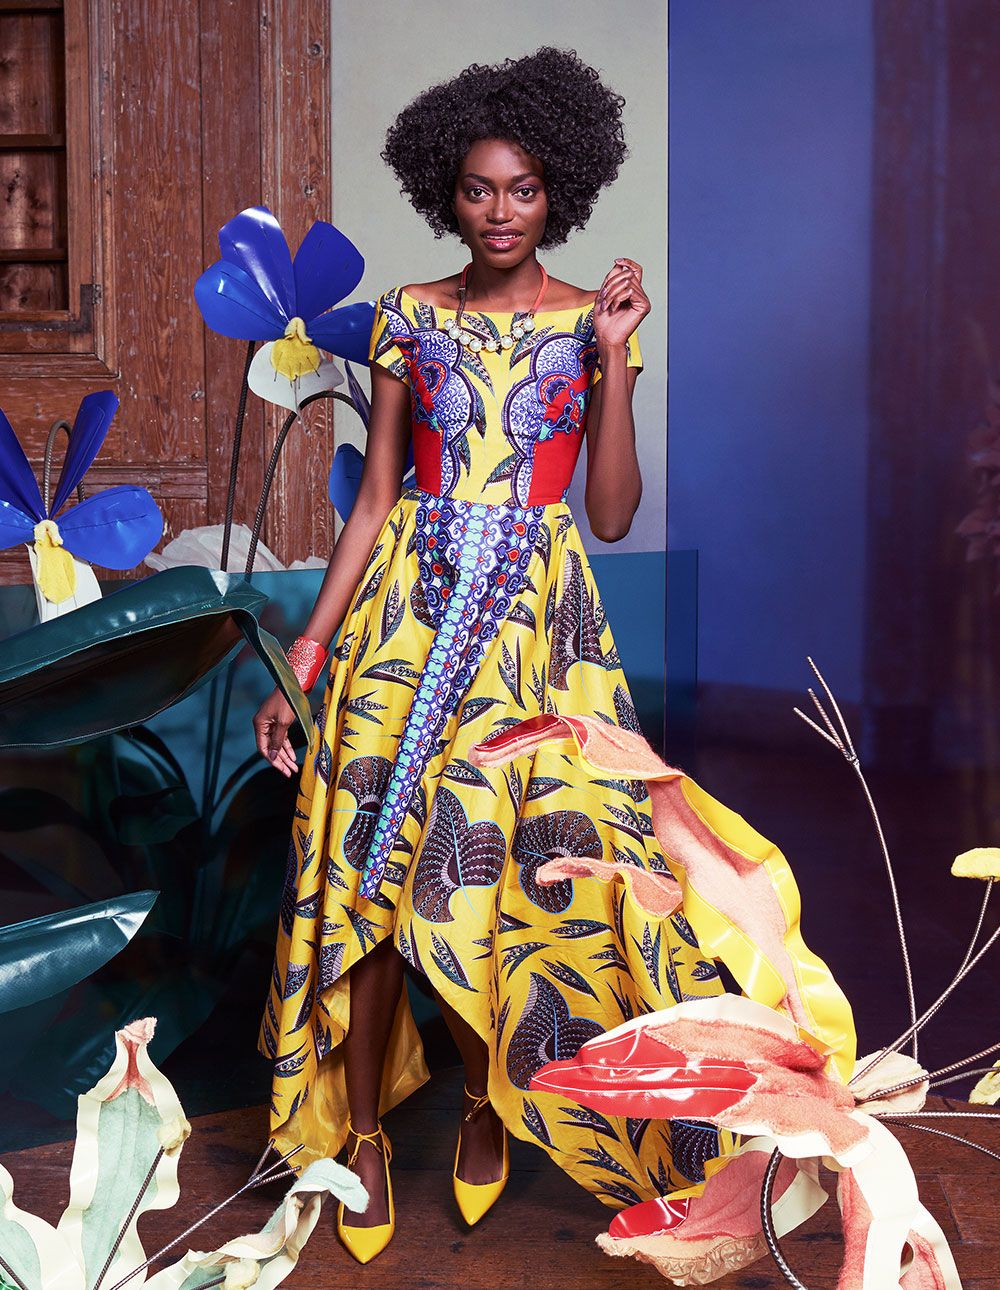 style vestimentaire années 50 femme africaine